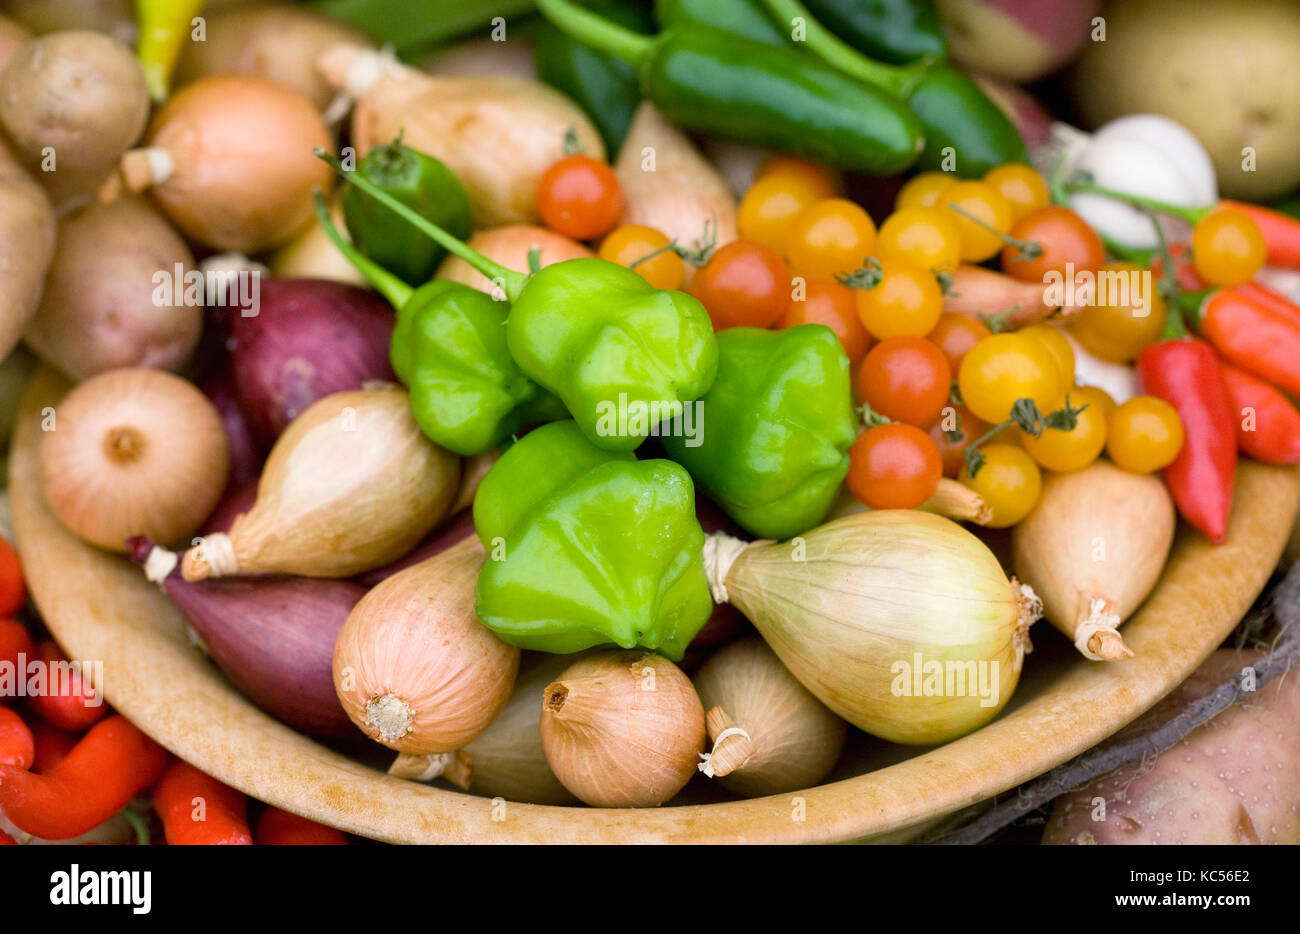 Vegetable arrangement. Stock Photo